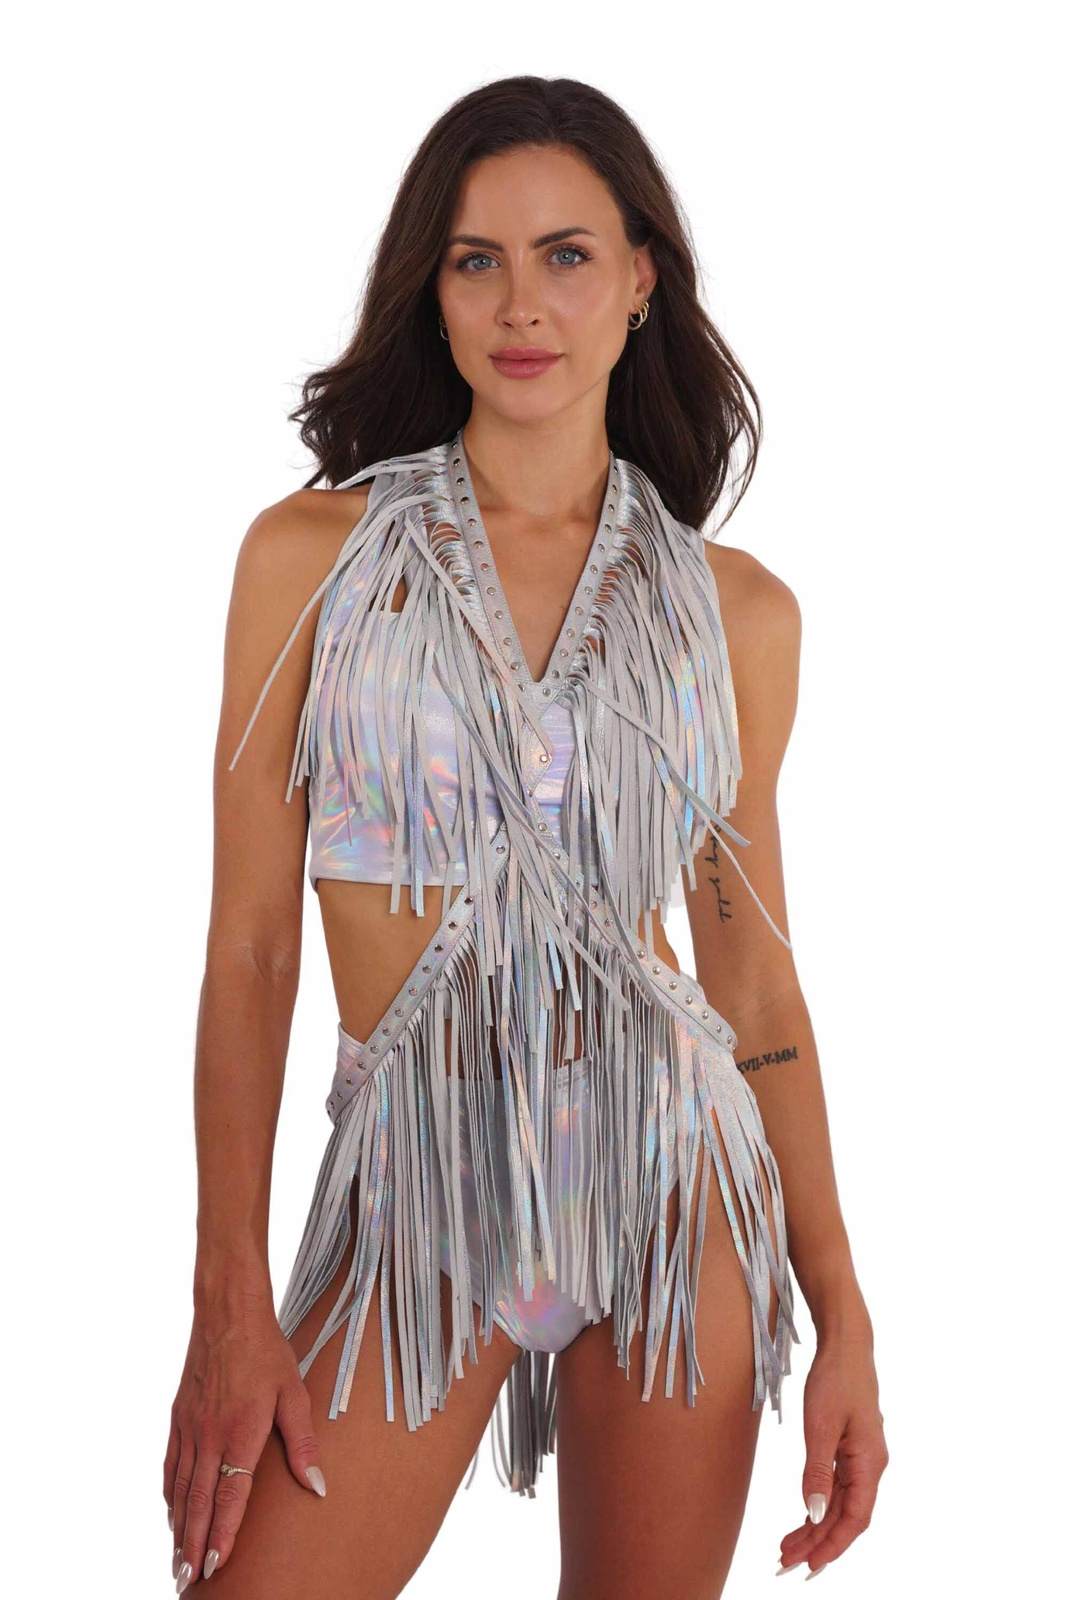 Holographic Fringe Dress Festival Harness from Love Khaos Rave Wear brand